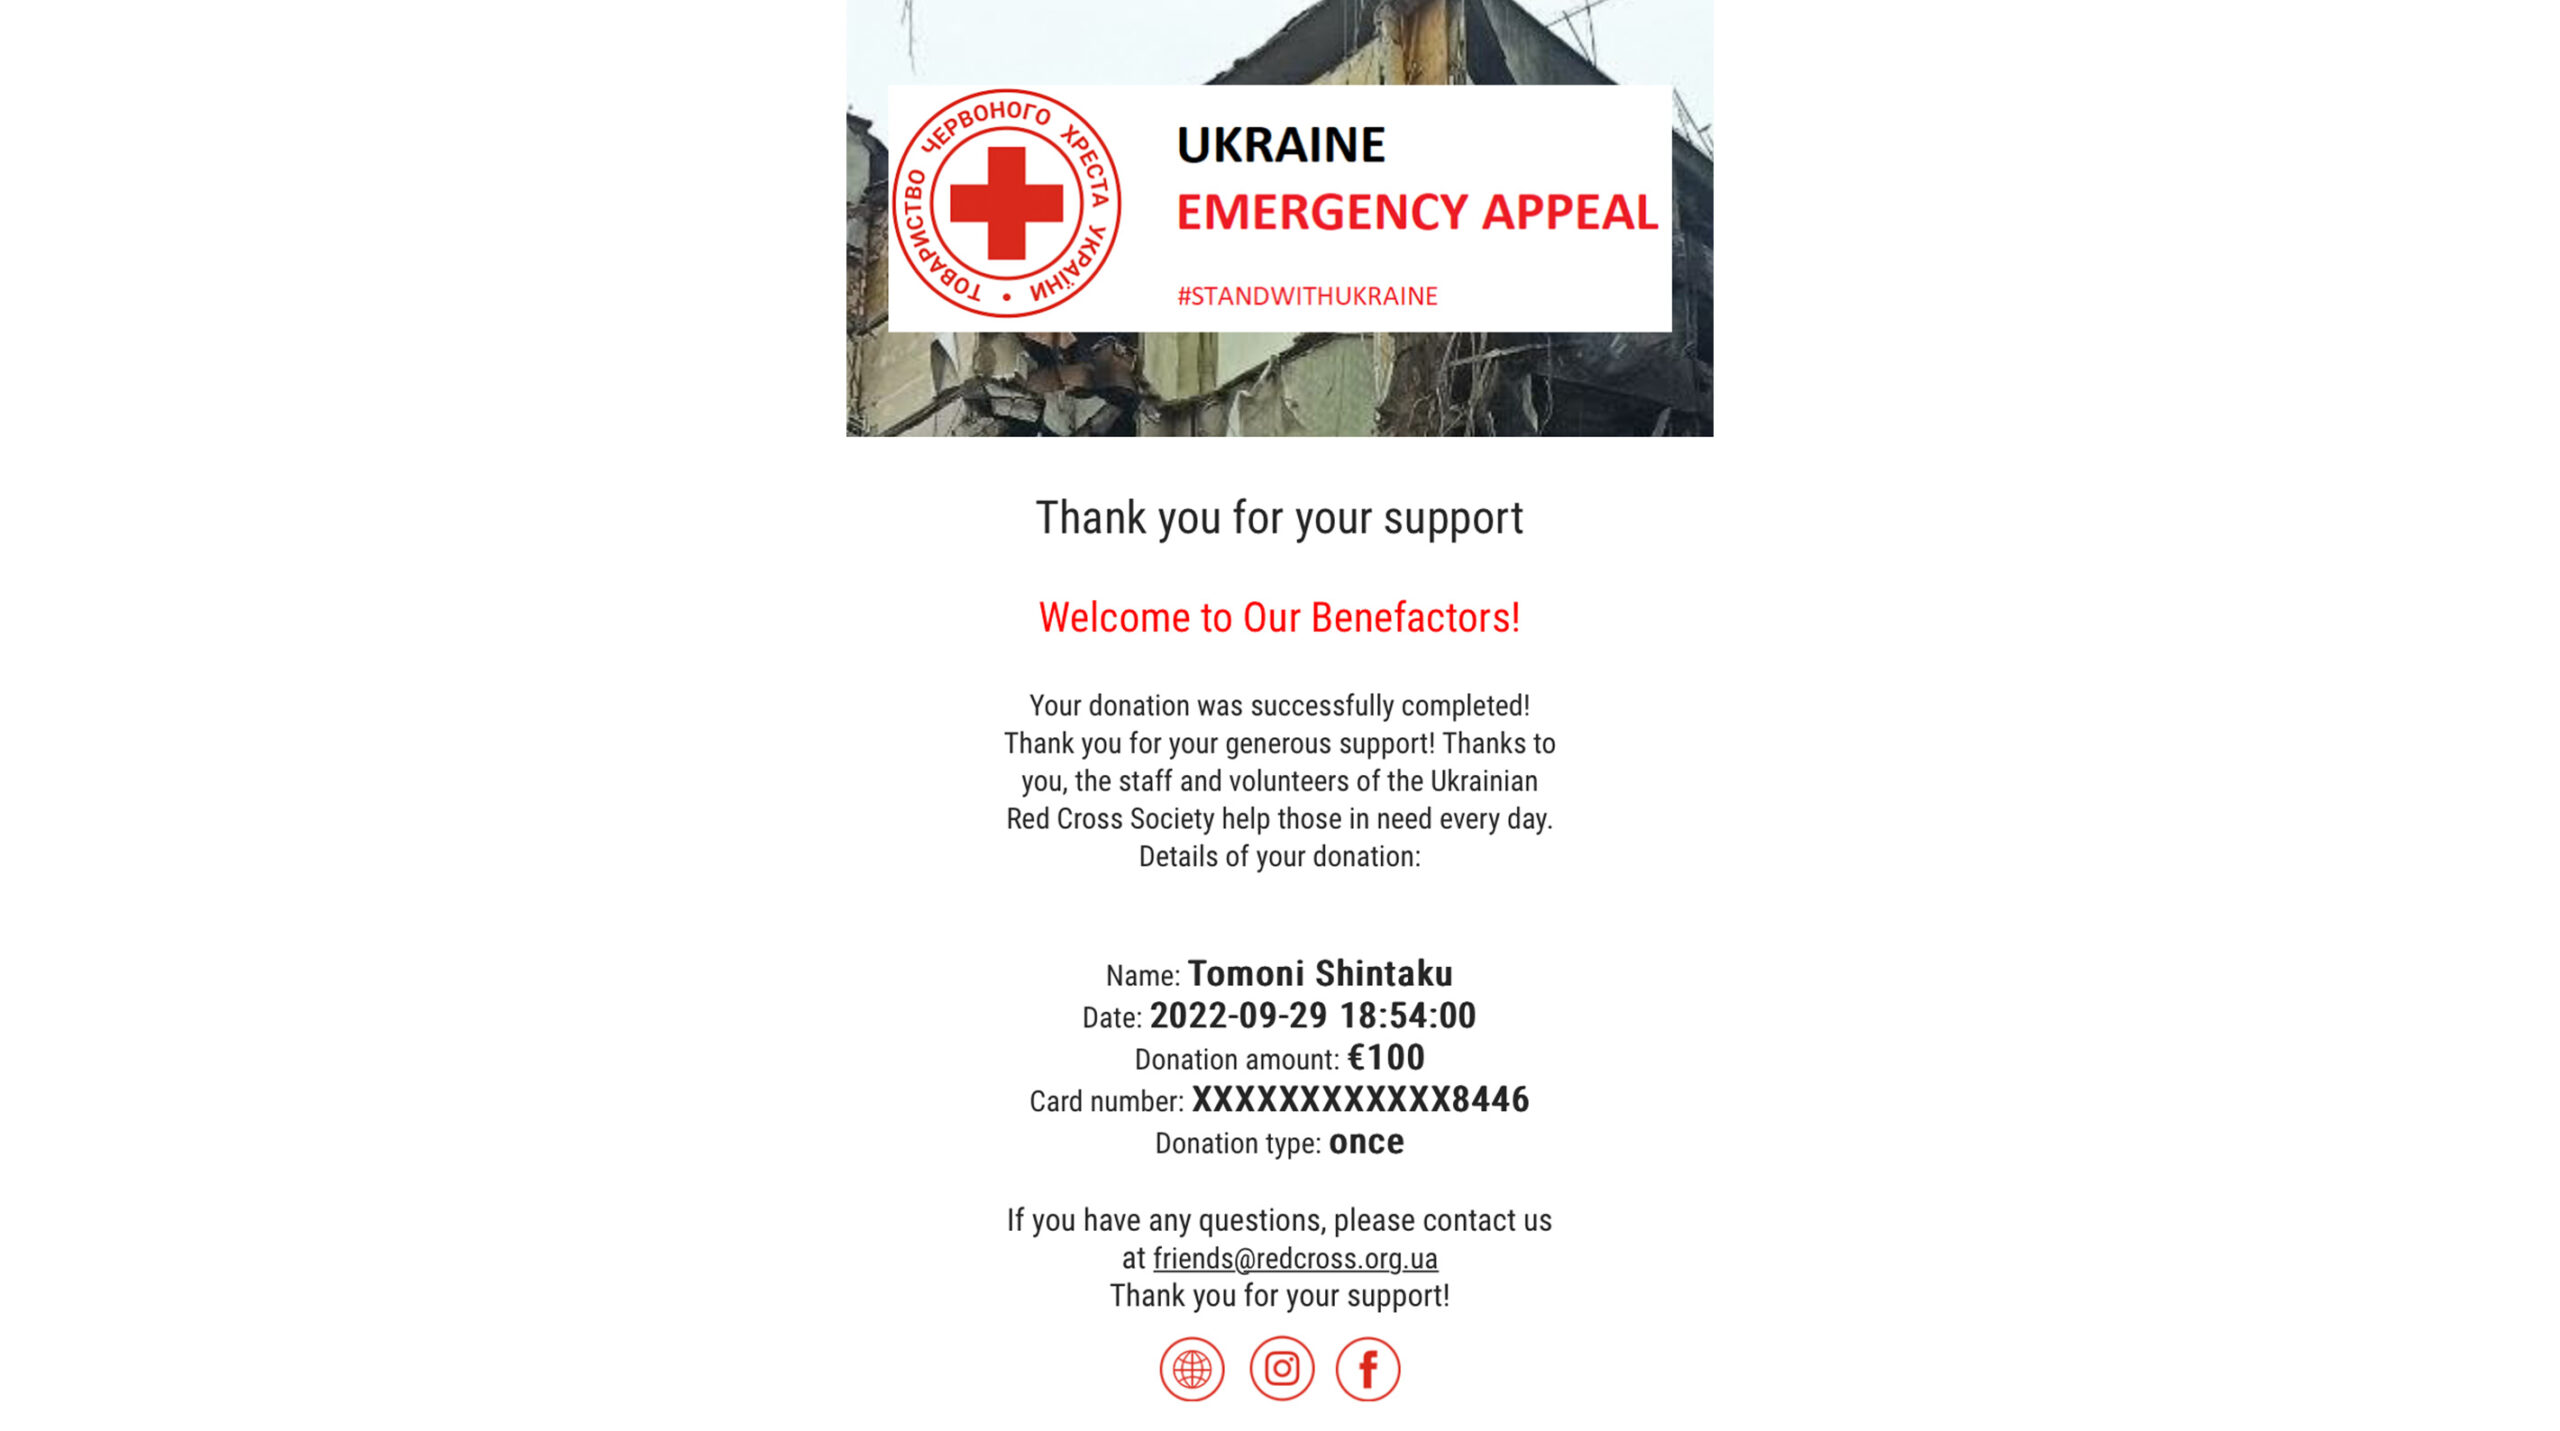 About Russia's invasion of Ukraine, 100 EUR donation completion screen capture to UNICEF by Mutsuhito Shintaku, representative employee of GK Shintaku